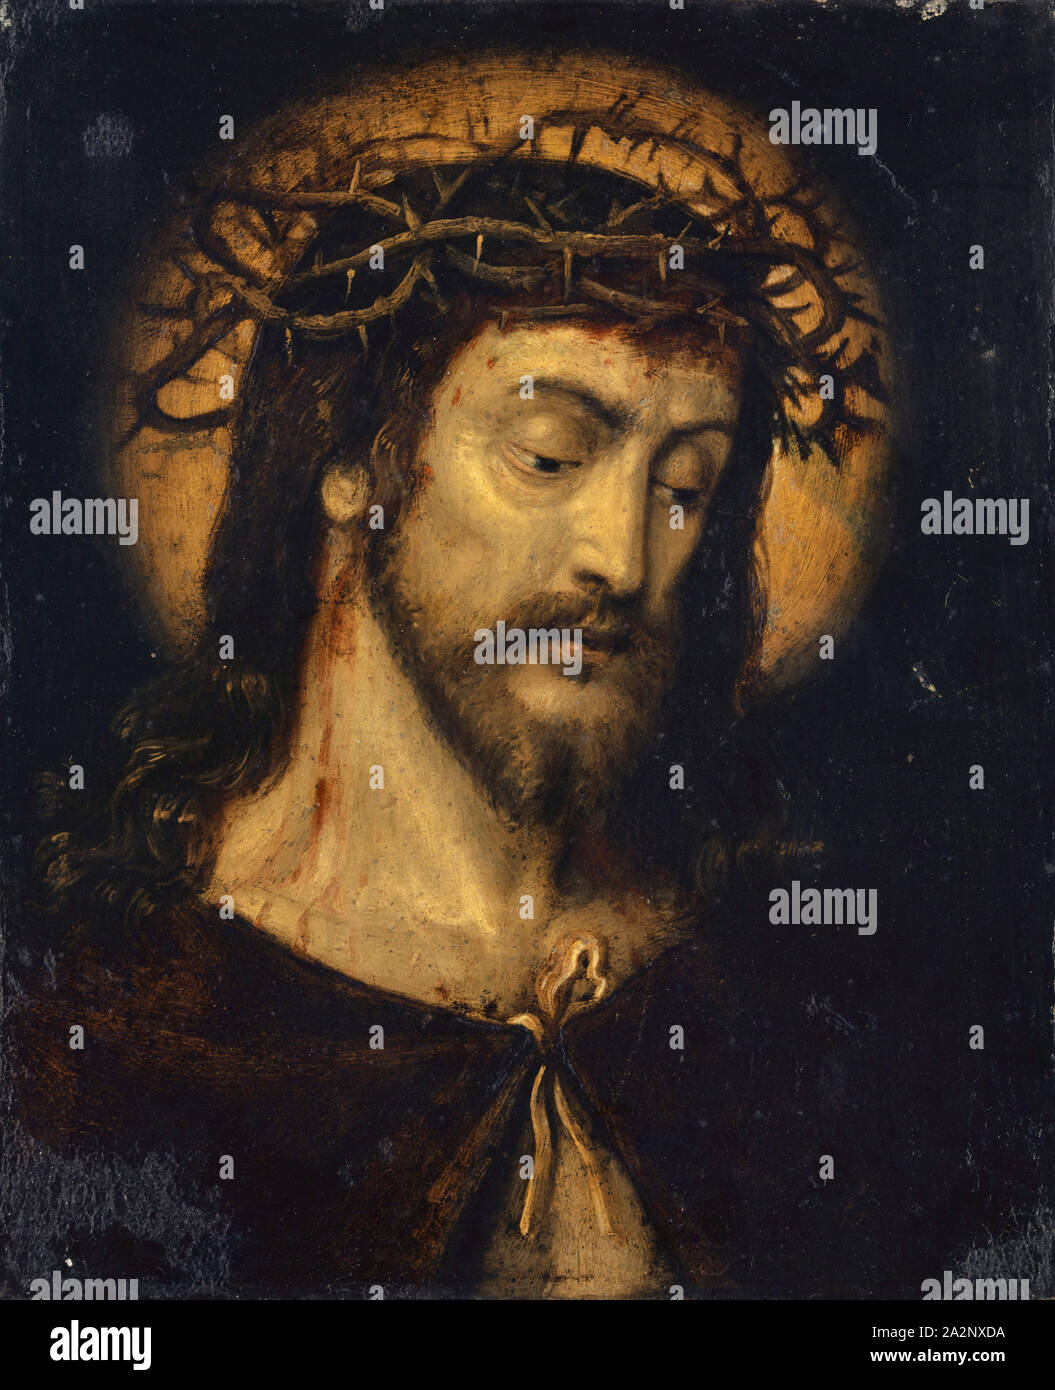 Cristo lo stregone, c. 1600, olio su rame, 17 x 14 cm, senza firma, Deutscher Meister Foto Stock